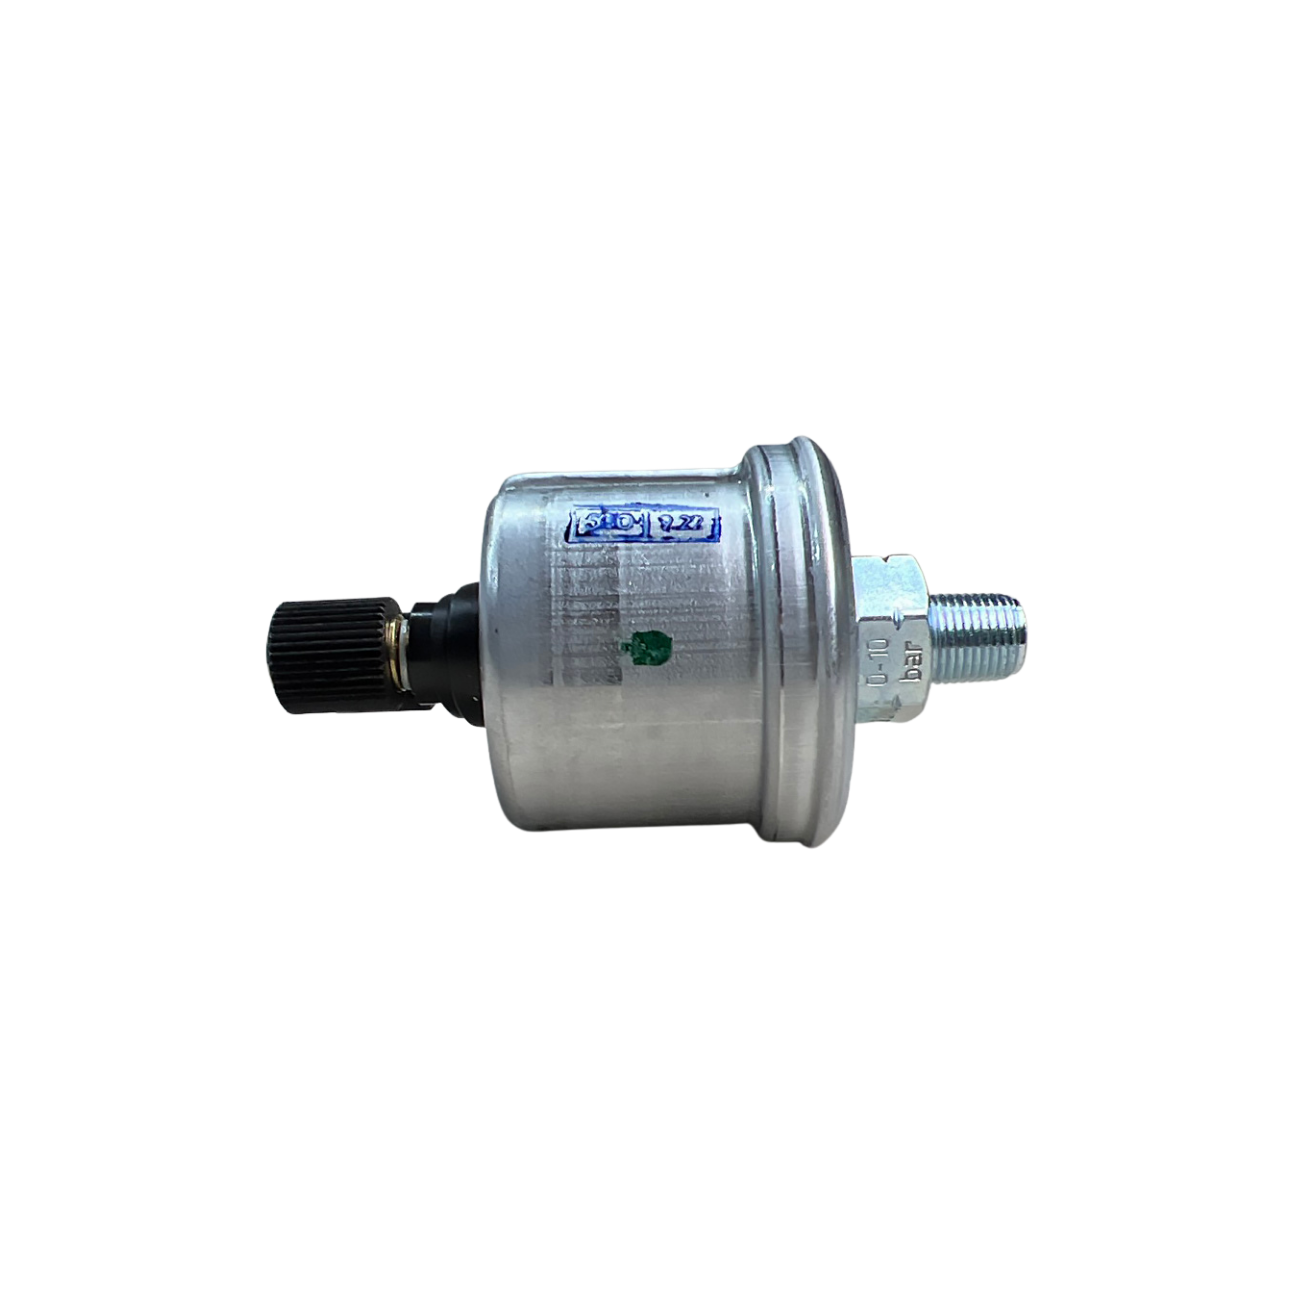 360081032014C Pressure Sensor Insul 10 bar, 150psi 1/